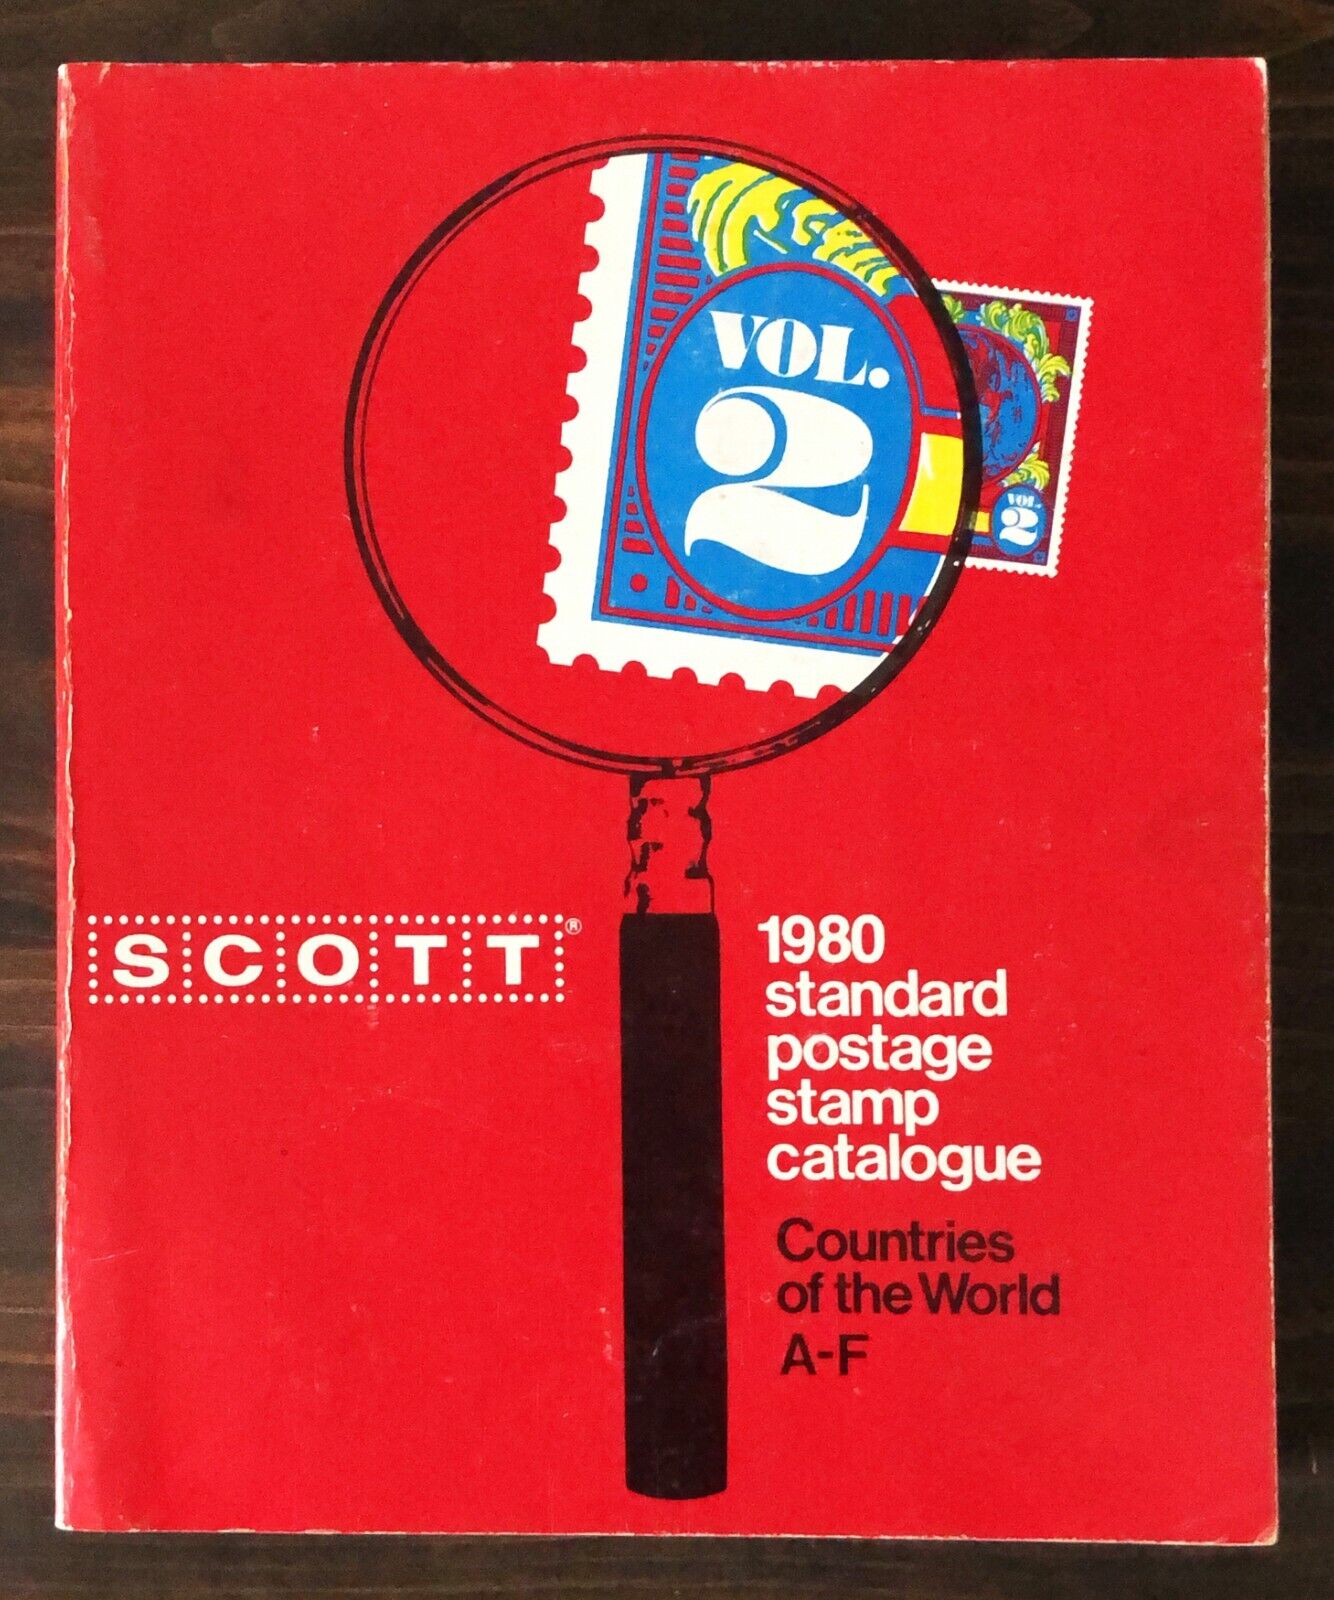 Scott Standard Postage Stamp Catalogue 1980 Vol 2